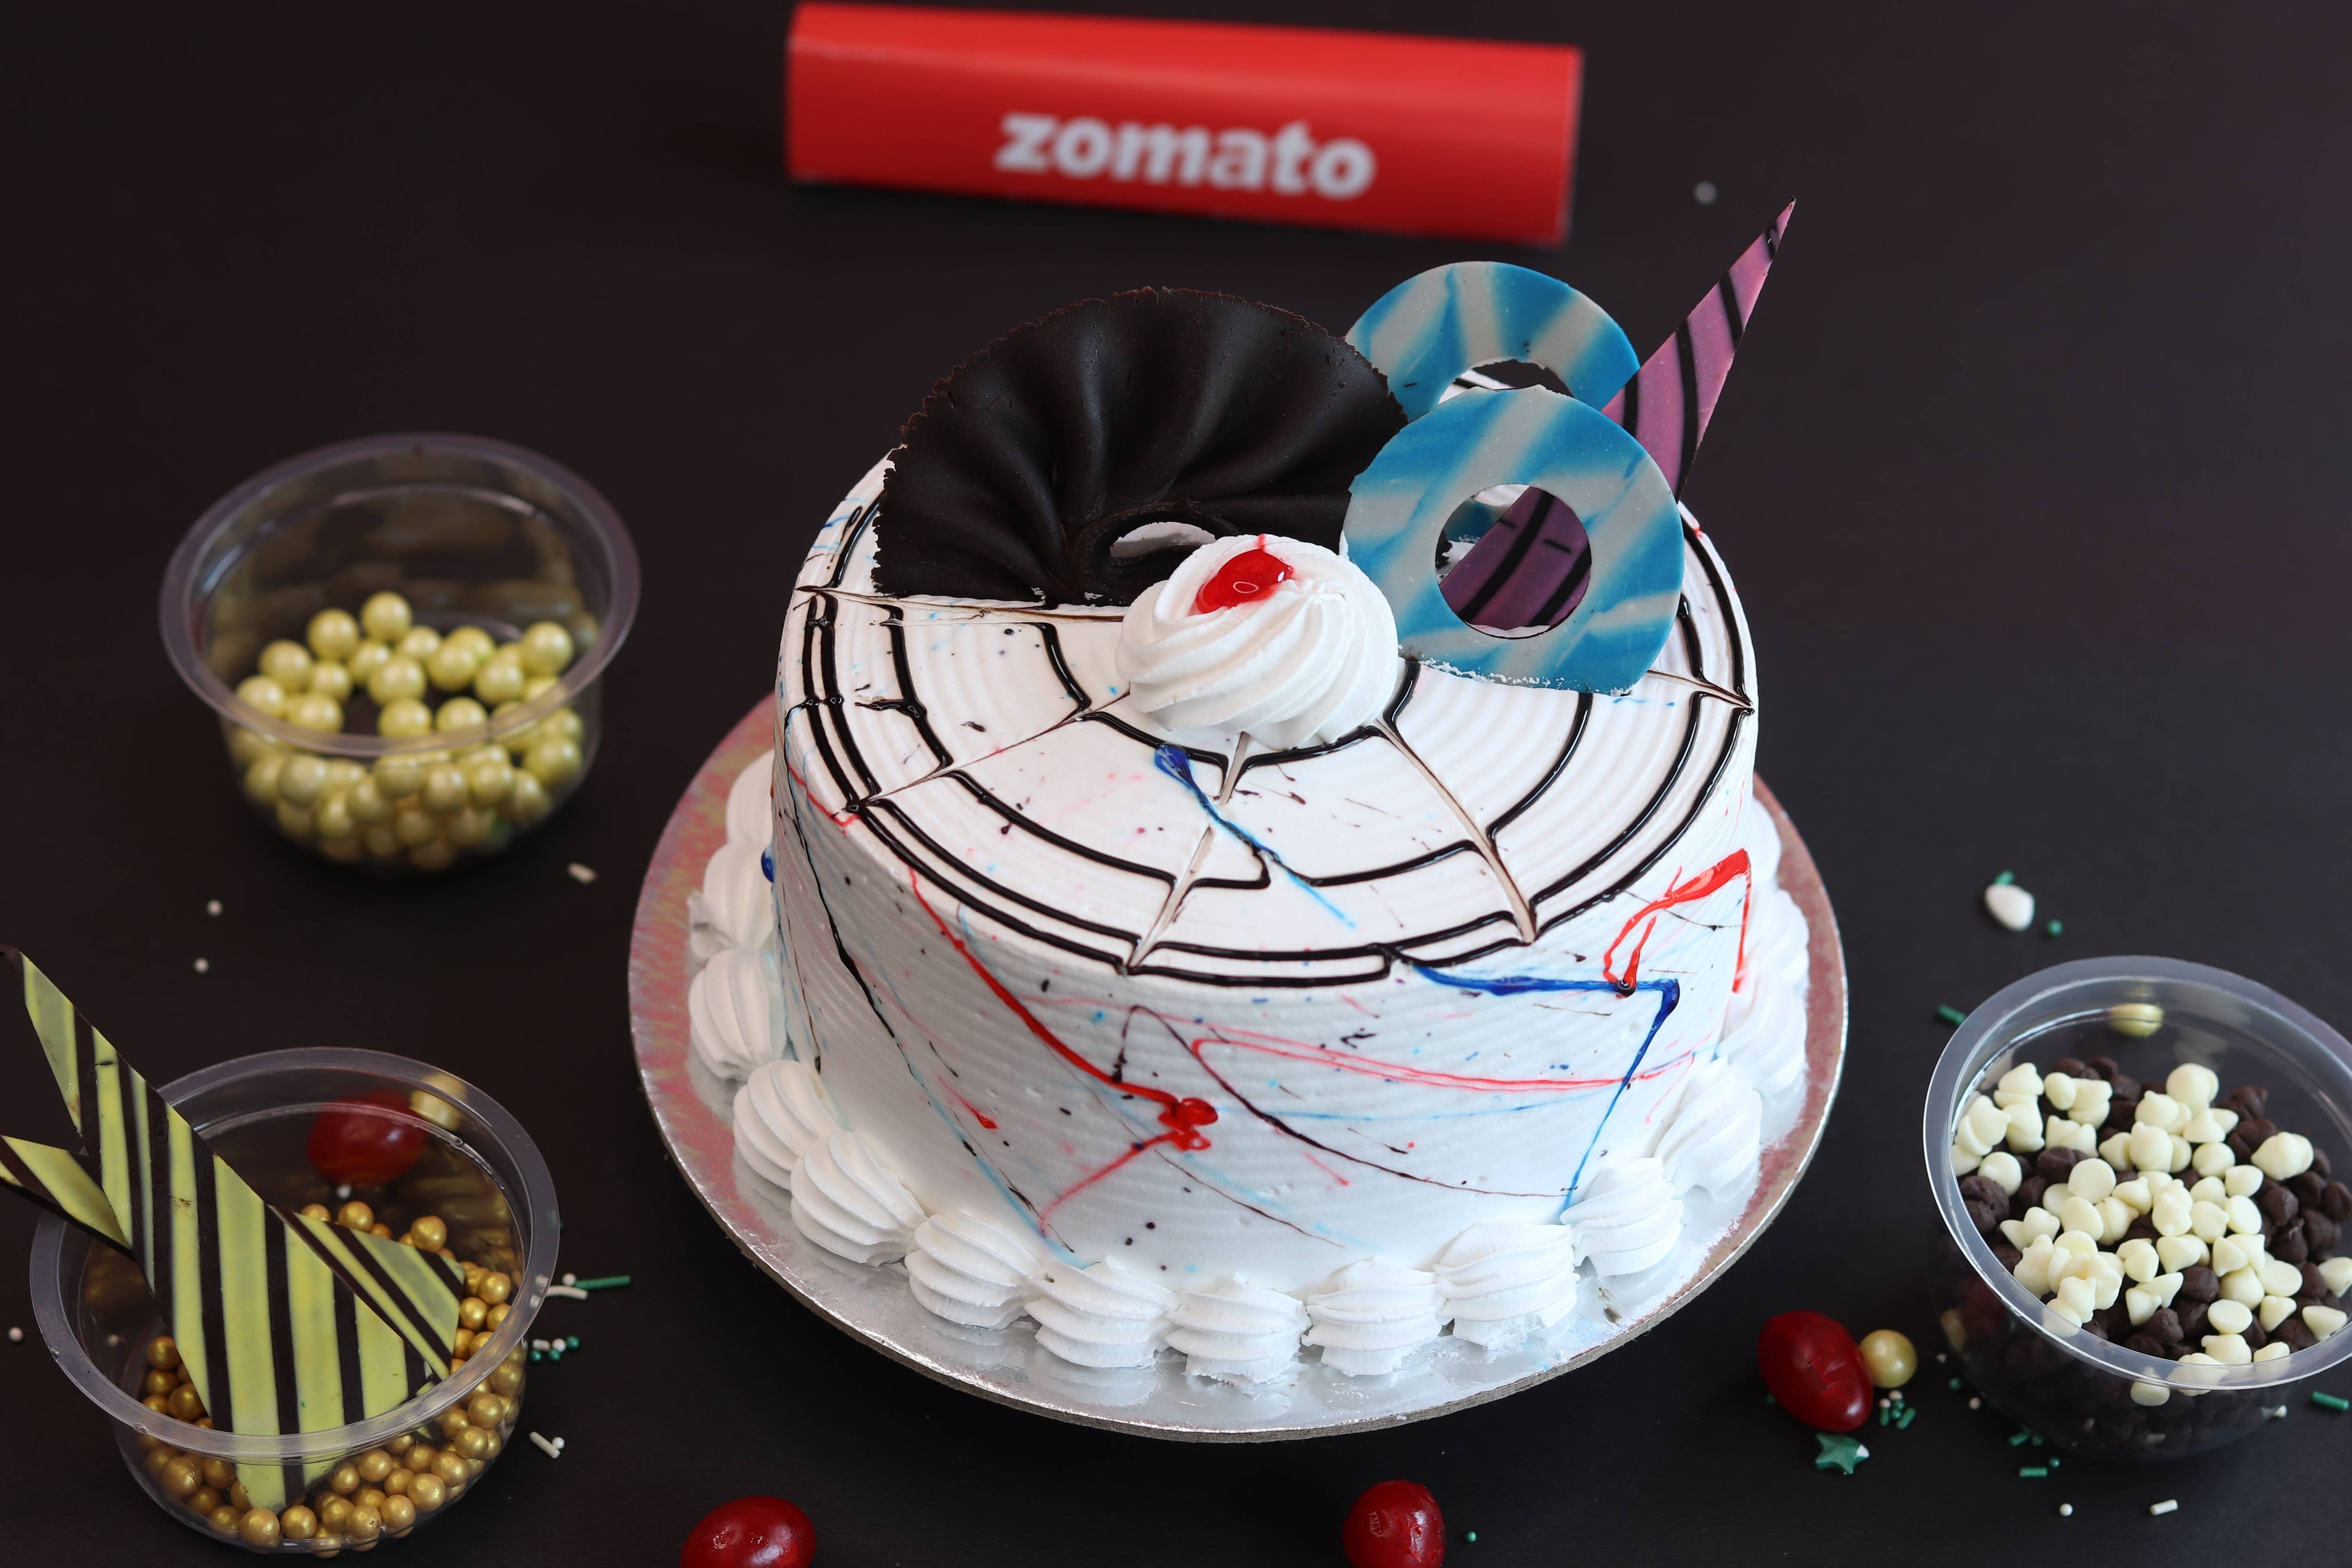 Zomato celebrates its birthday with an innovative print campaign